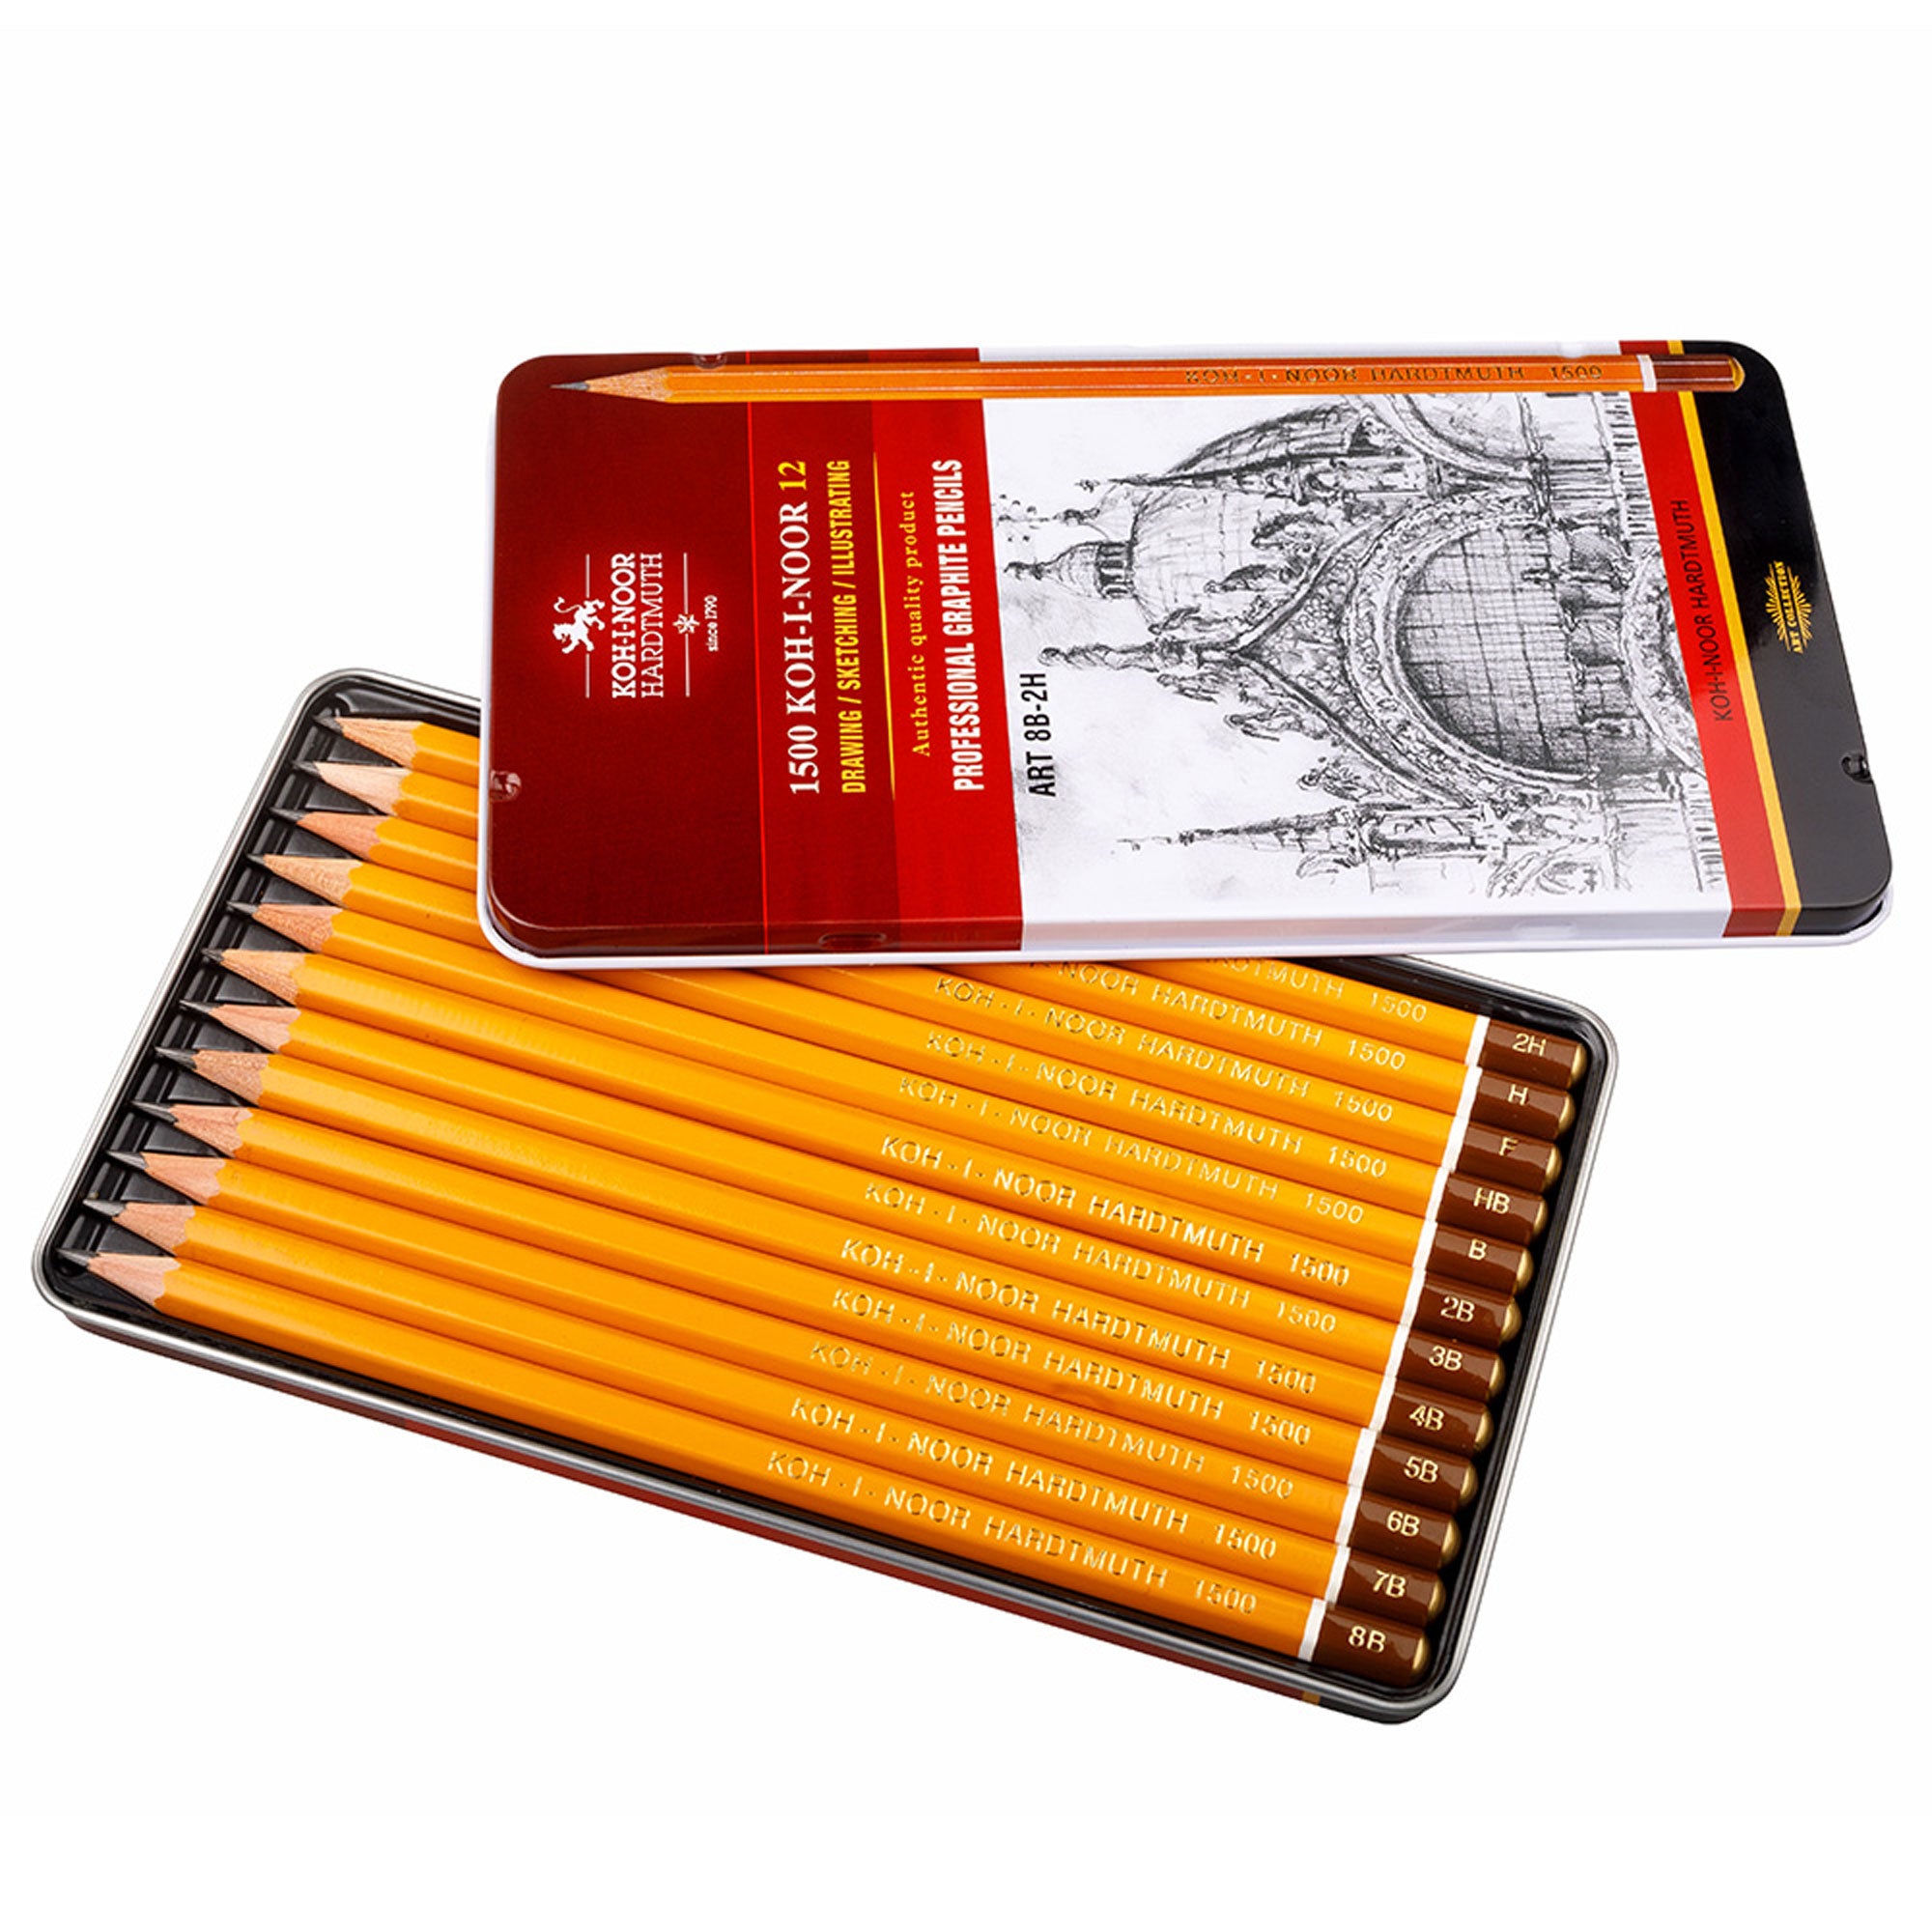 Koh-I-Noor Professional Graphite Pencils Tin of 12 8B-2H ART